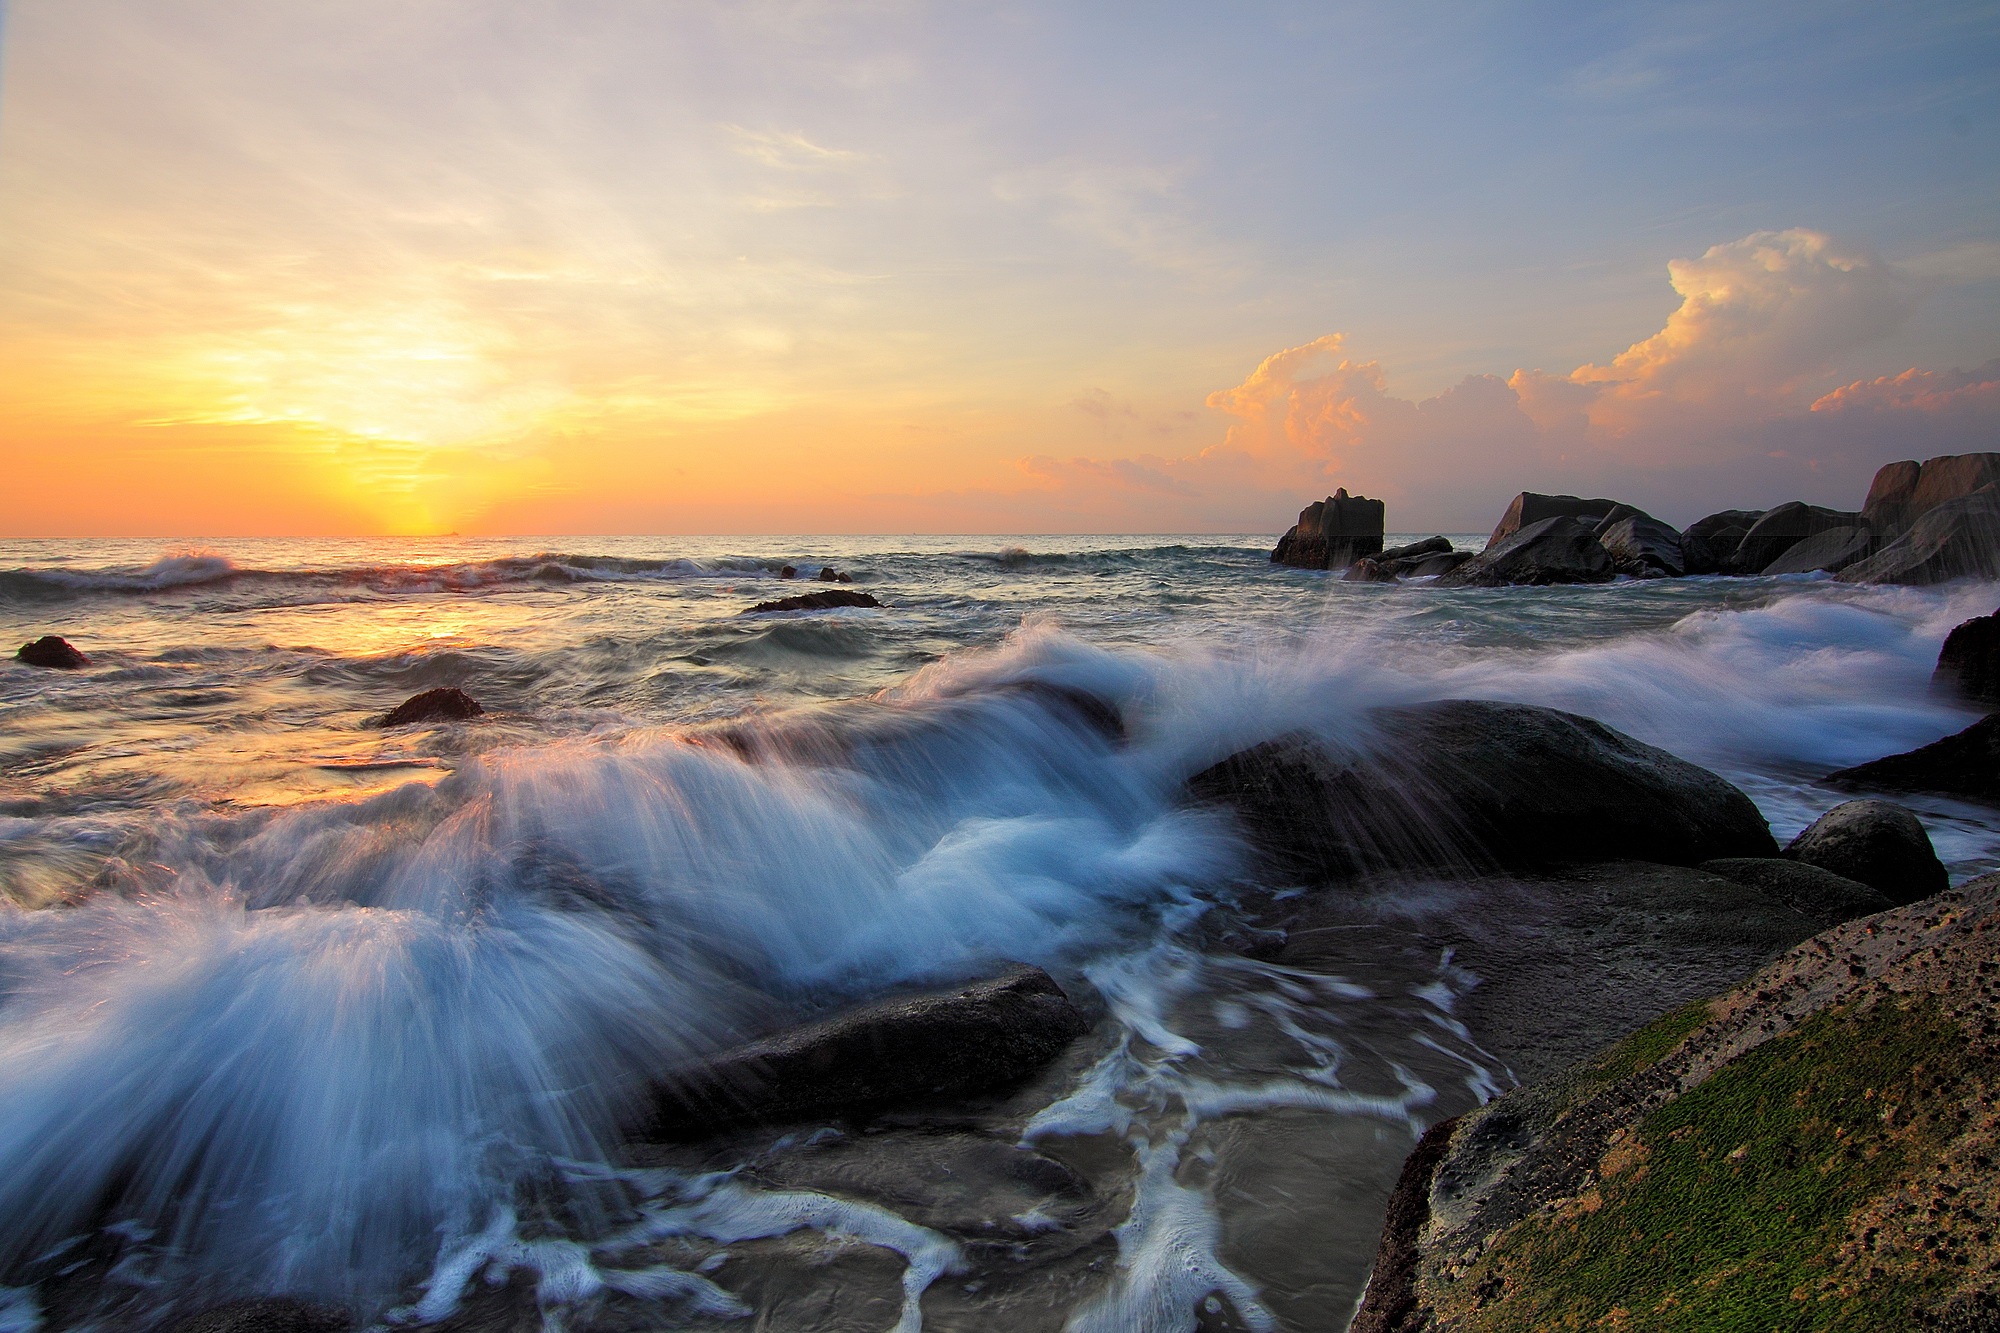 Sunset on a rocky coastline with waves